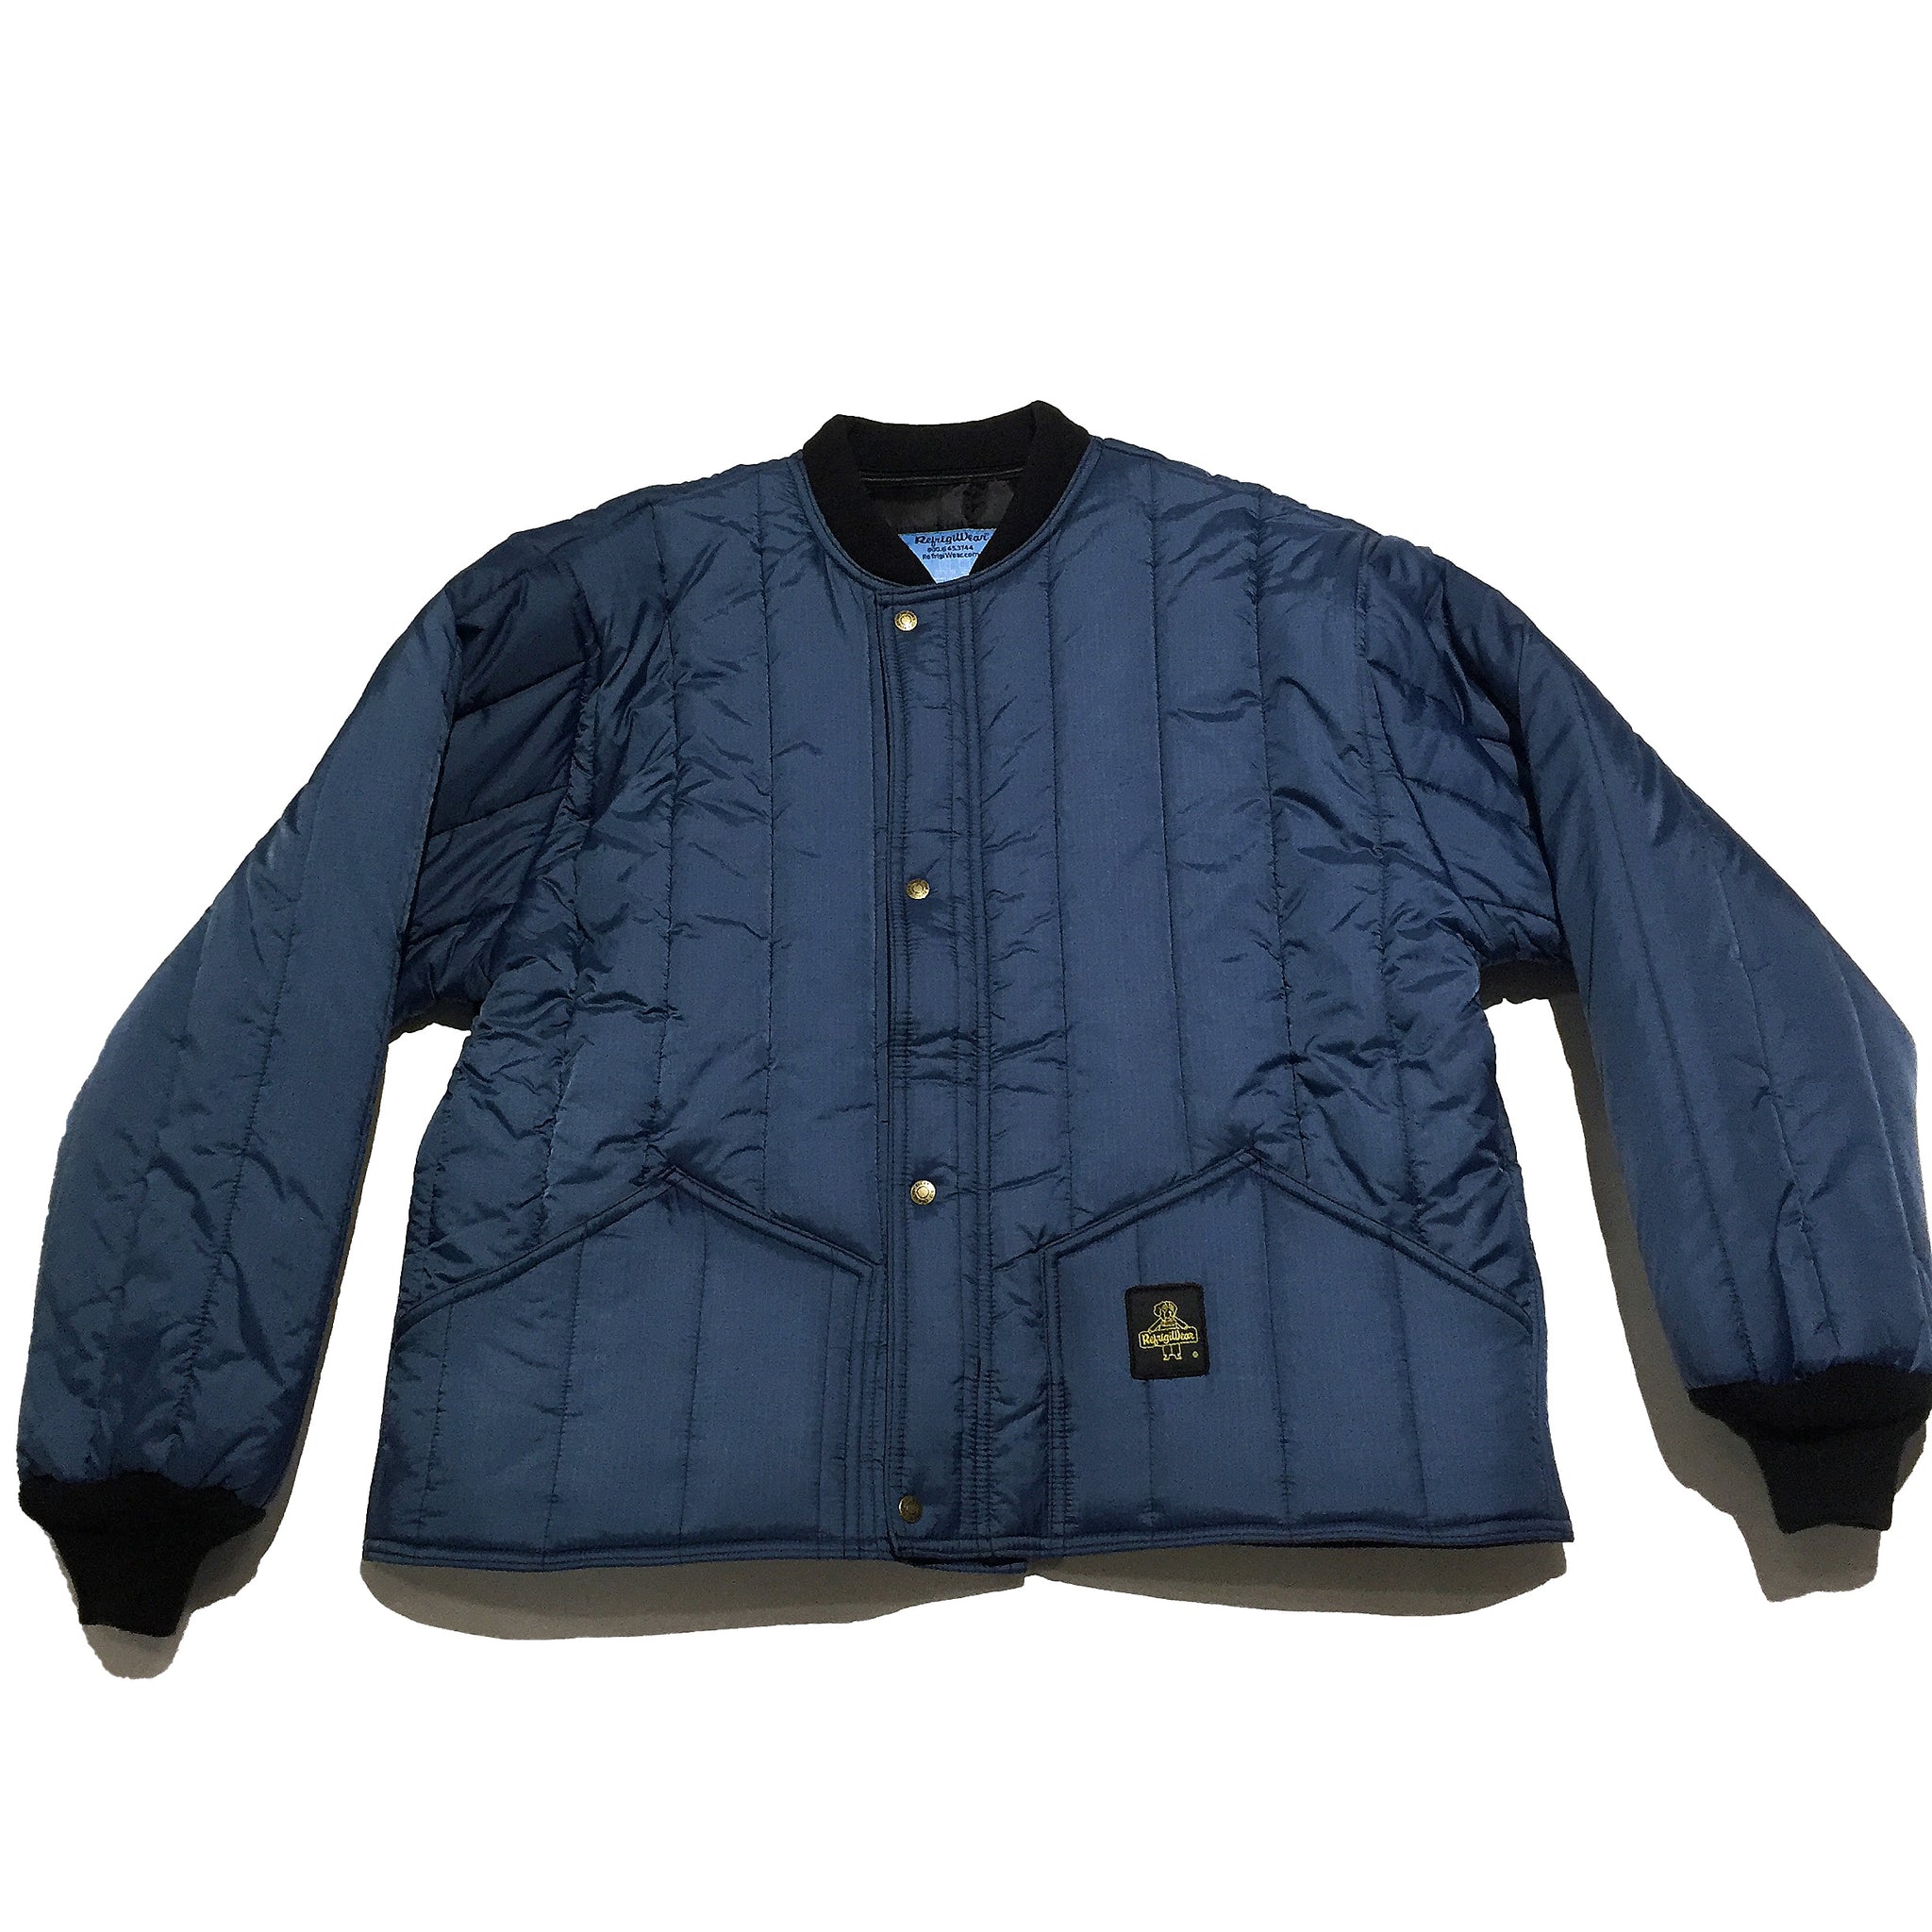 Navy Blue RefrigiWear Jacket